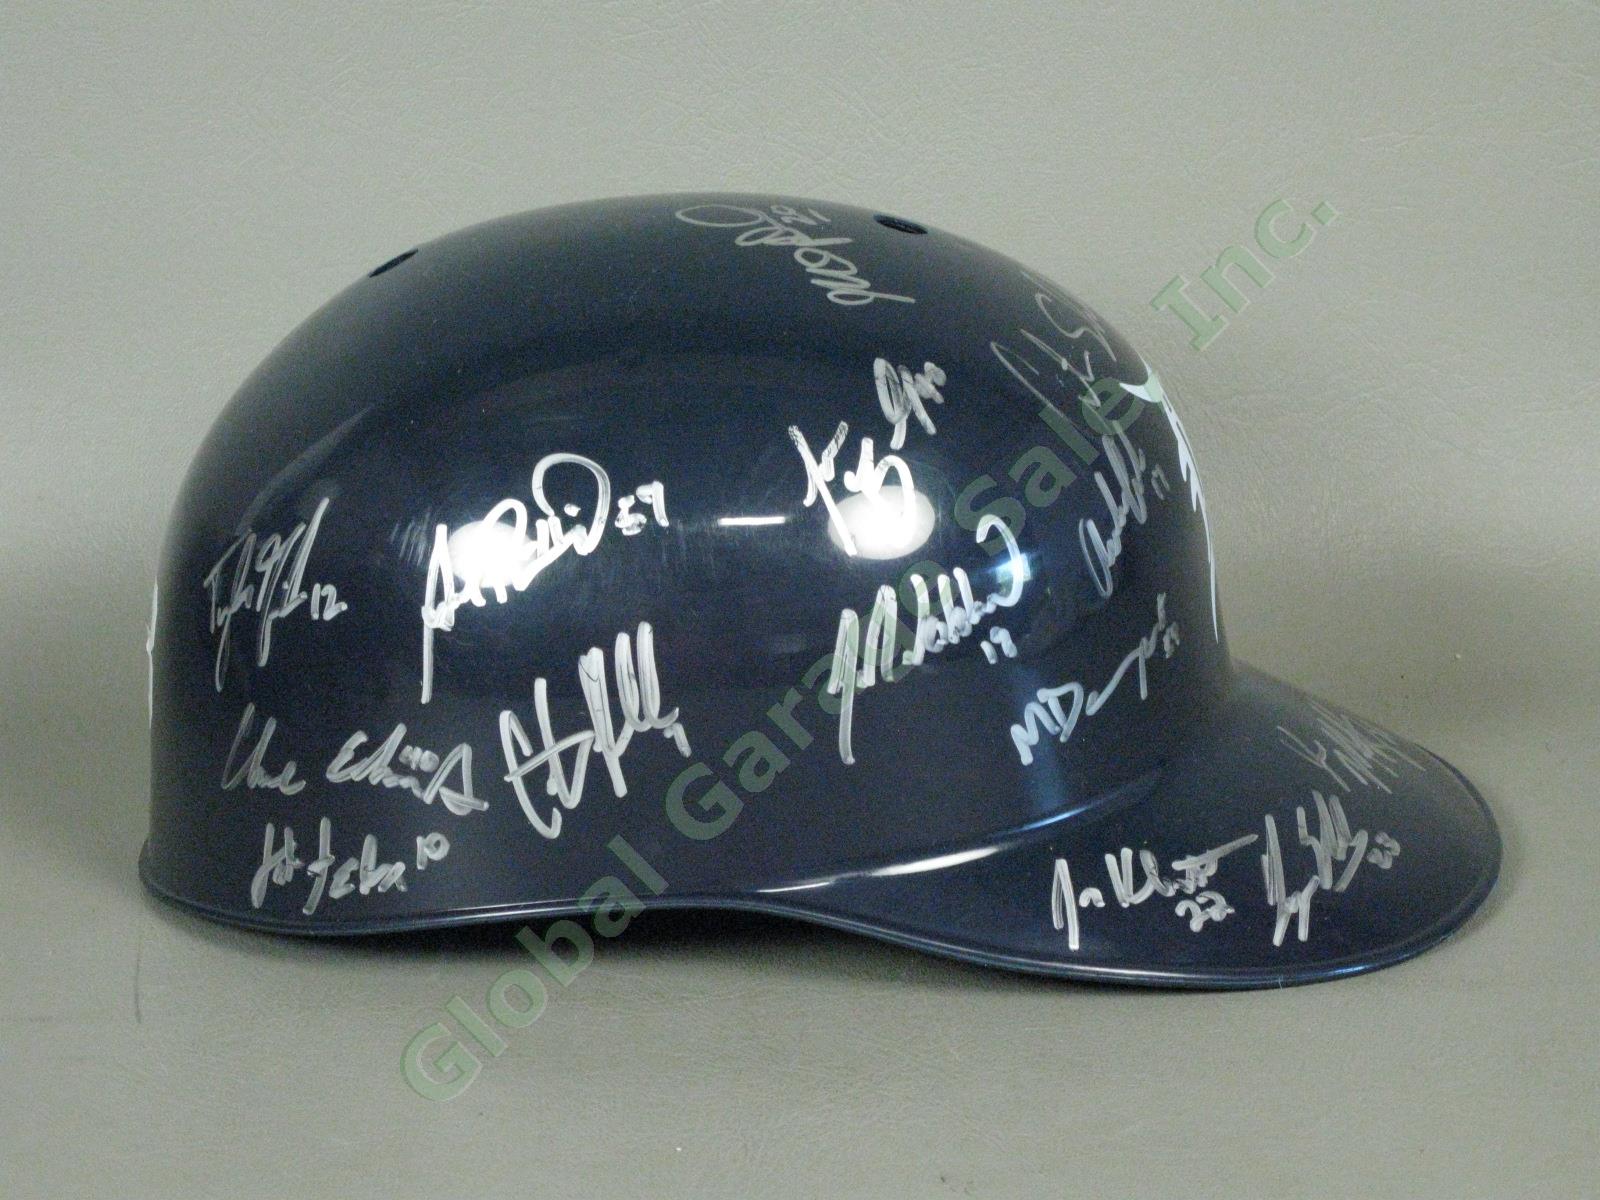 2013 Connecticut Tigers Team Signed Baseball Helmet MiLB MLB NYPL Detroit NR 1